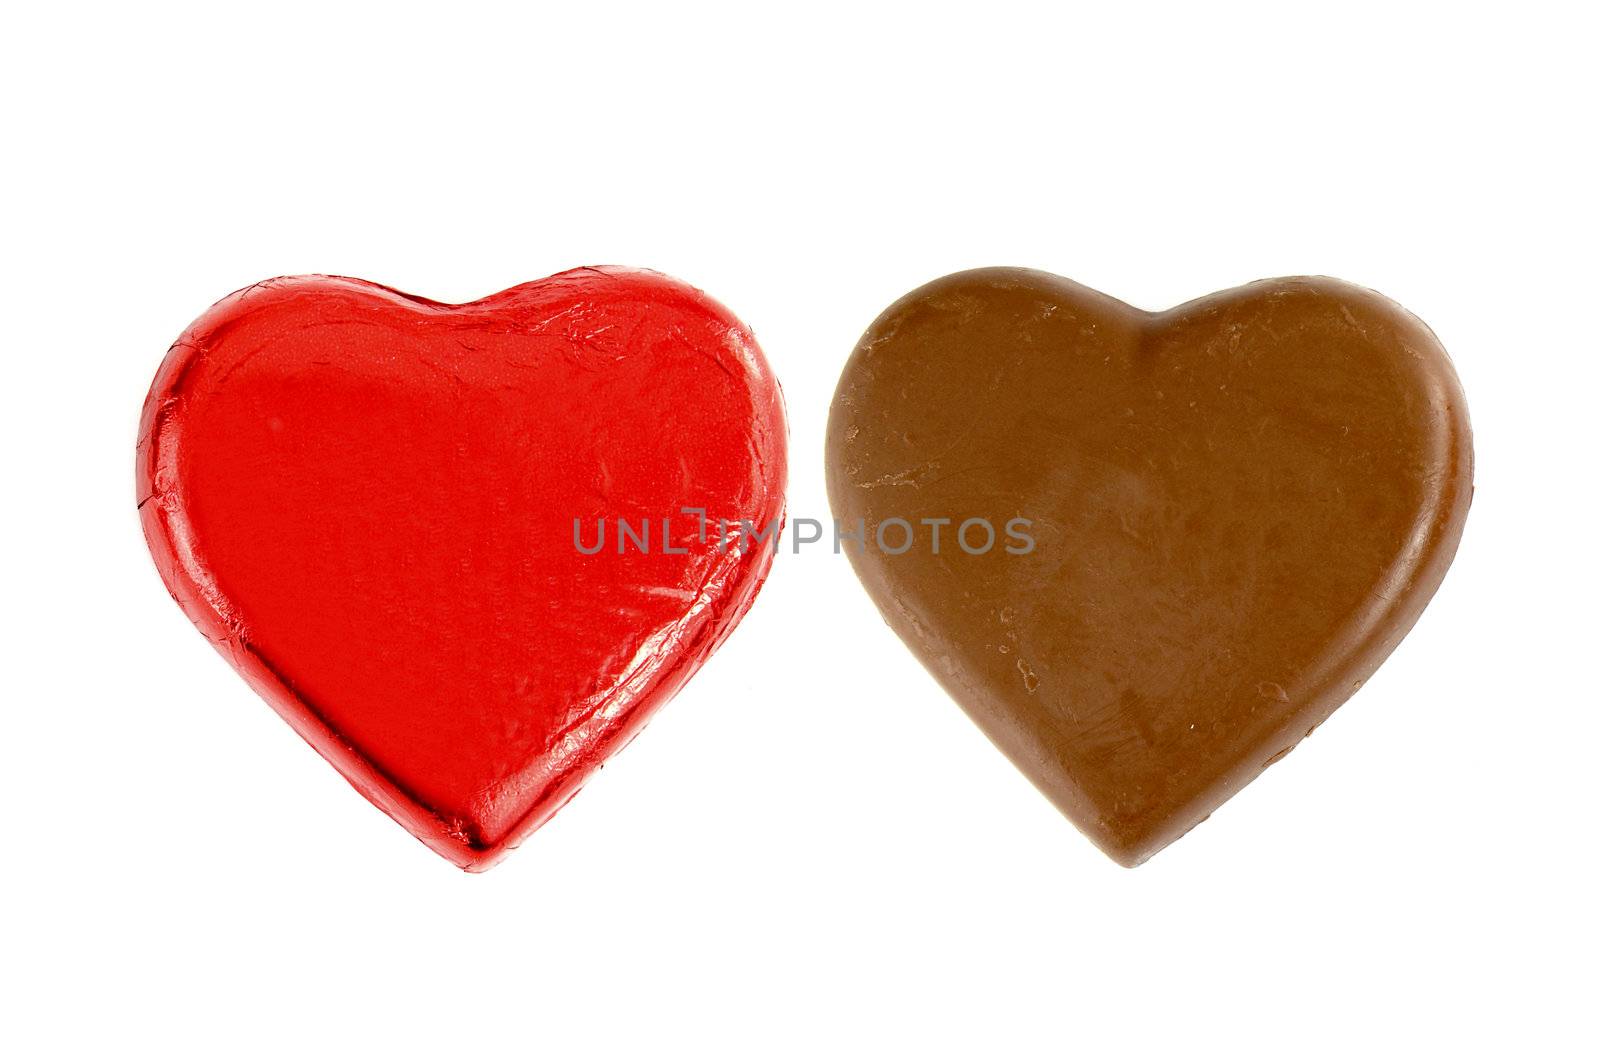 chocolates, Heart shape, isolate on white background by geargodz